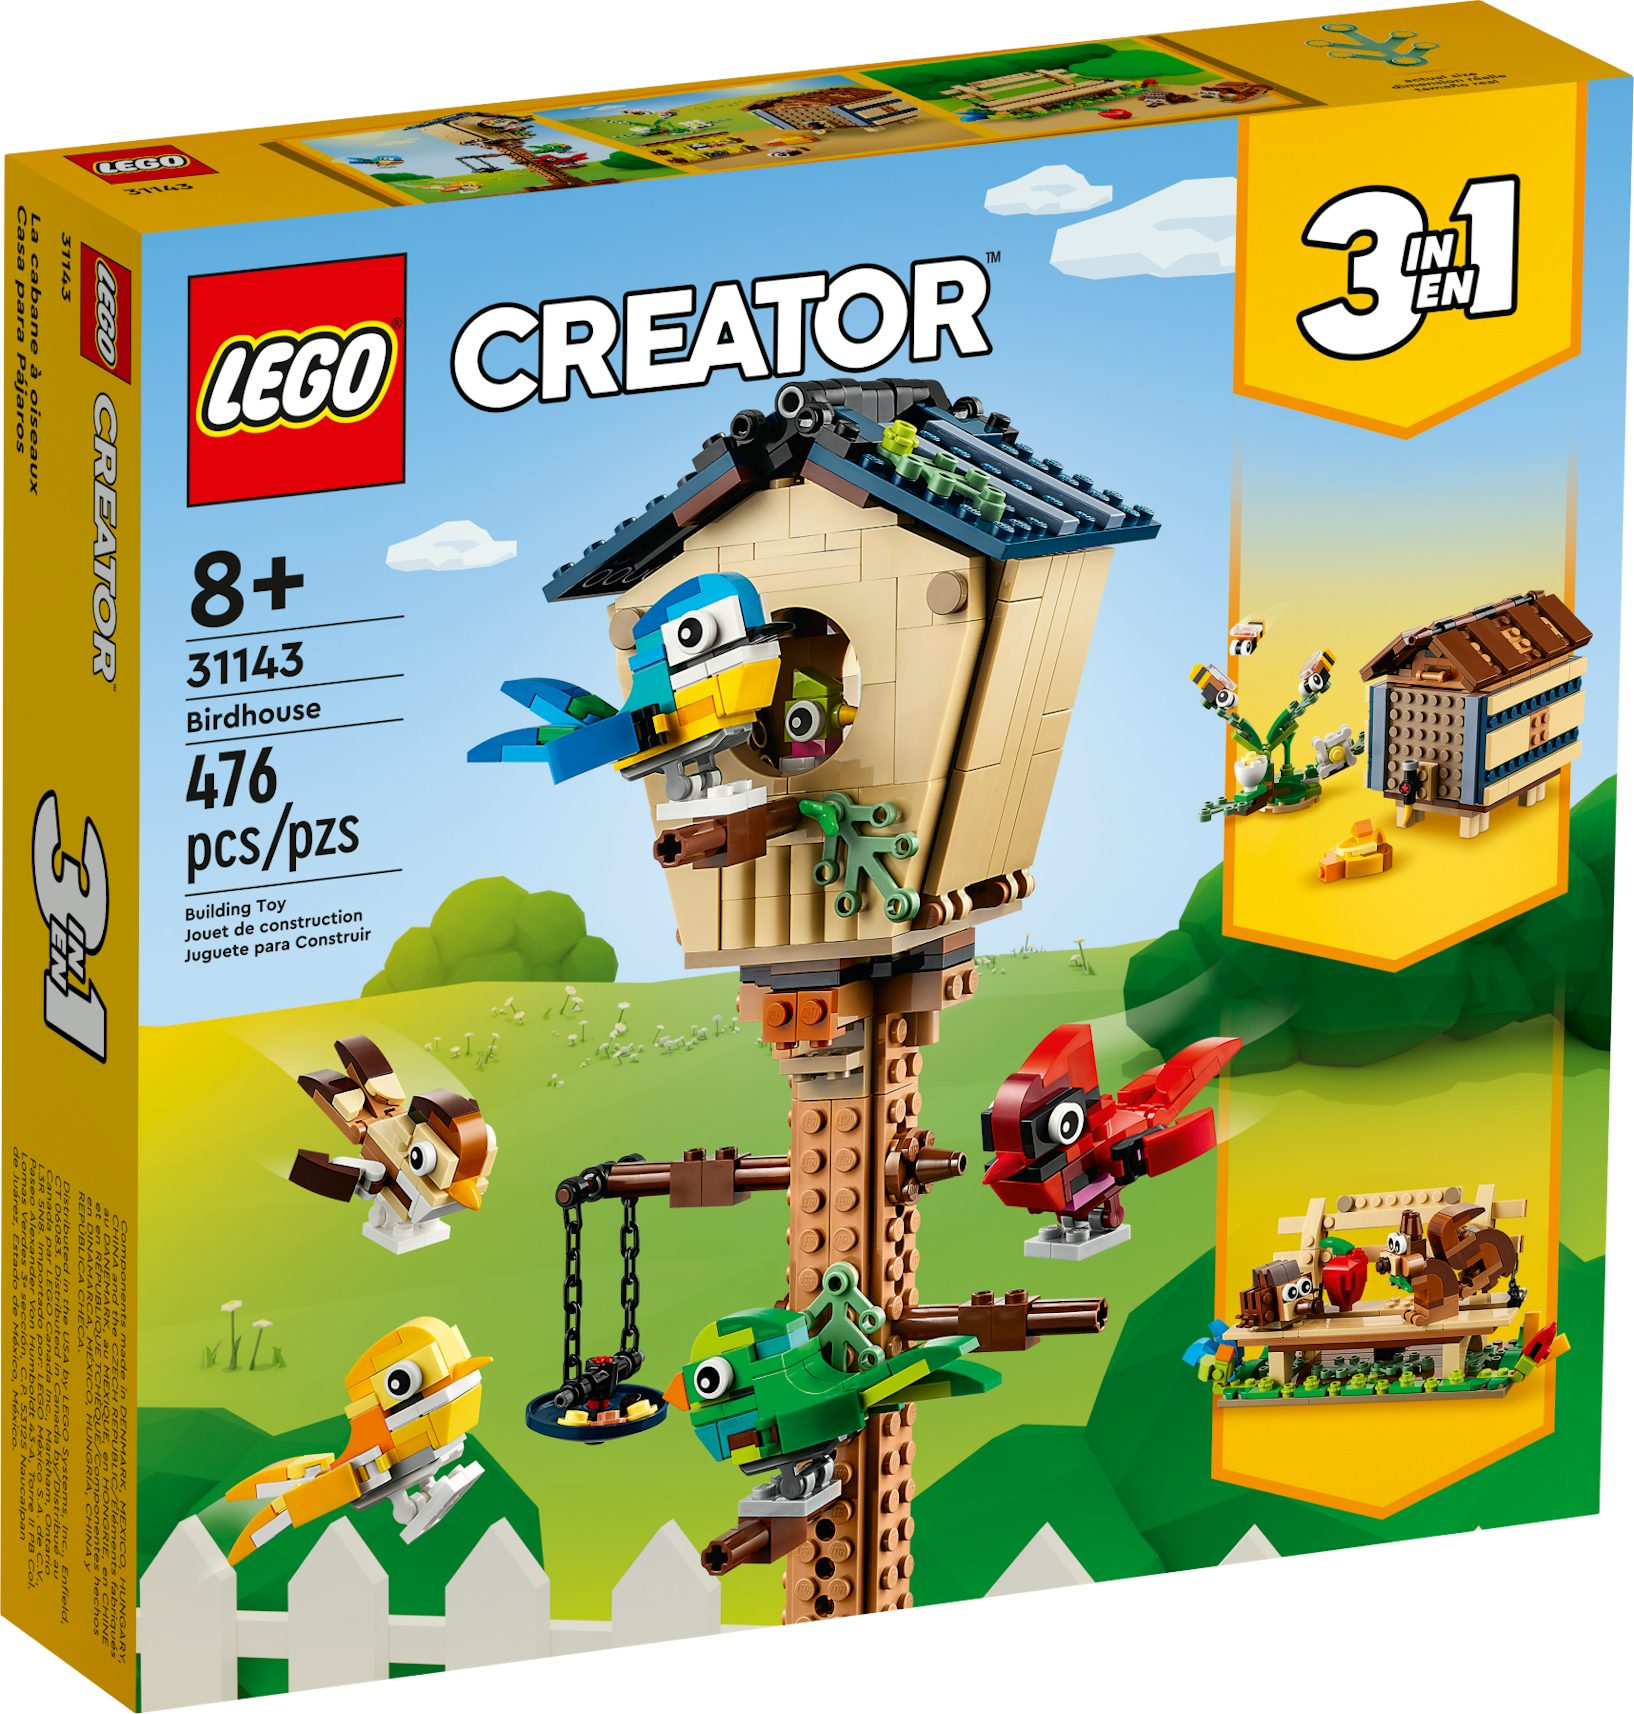 Creator 3 in 1 - LEGO Certified Store (Ban Kee Bricks)